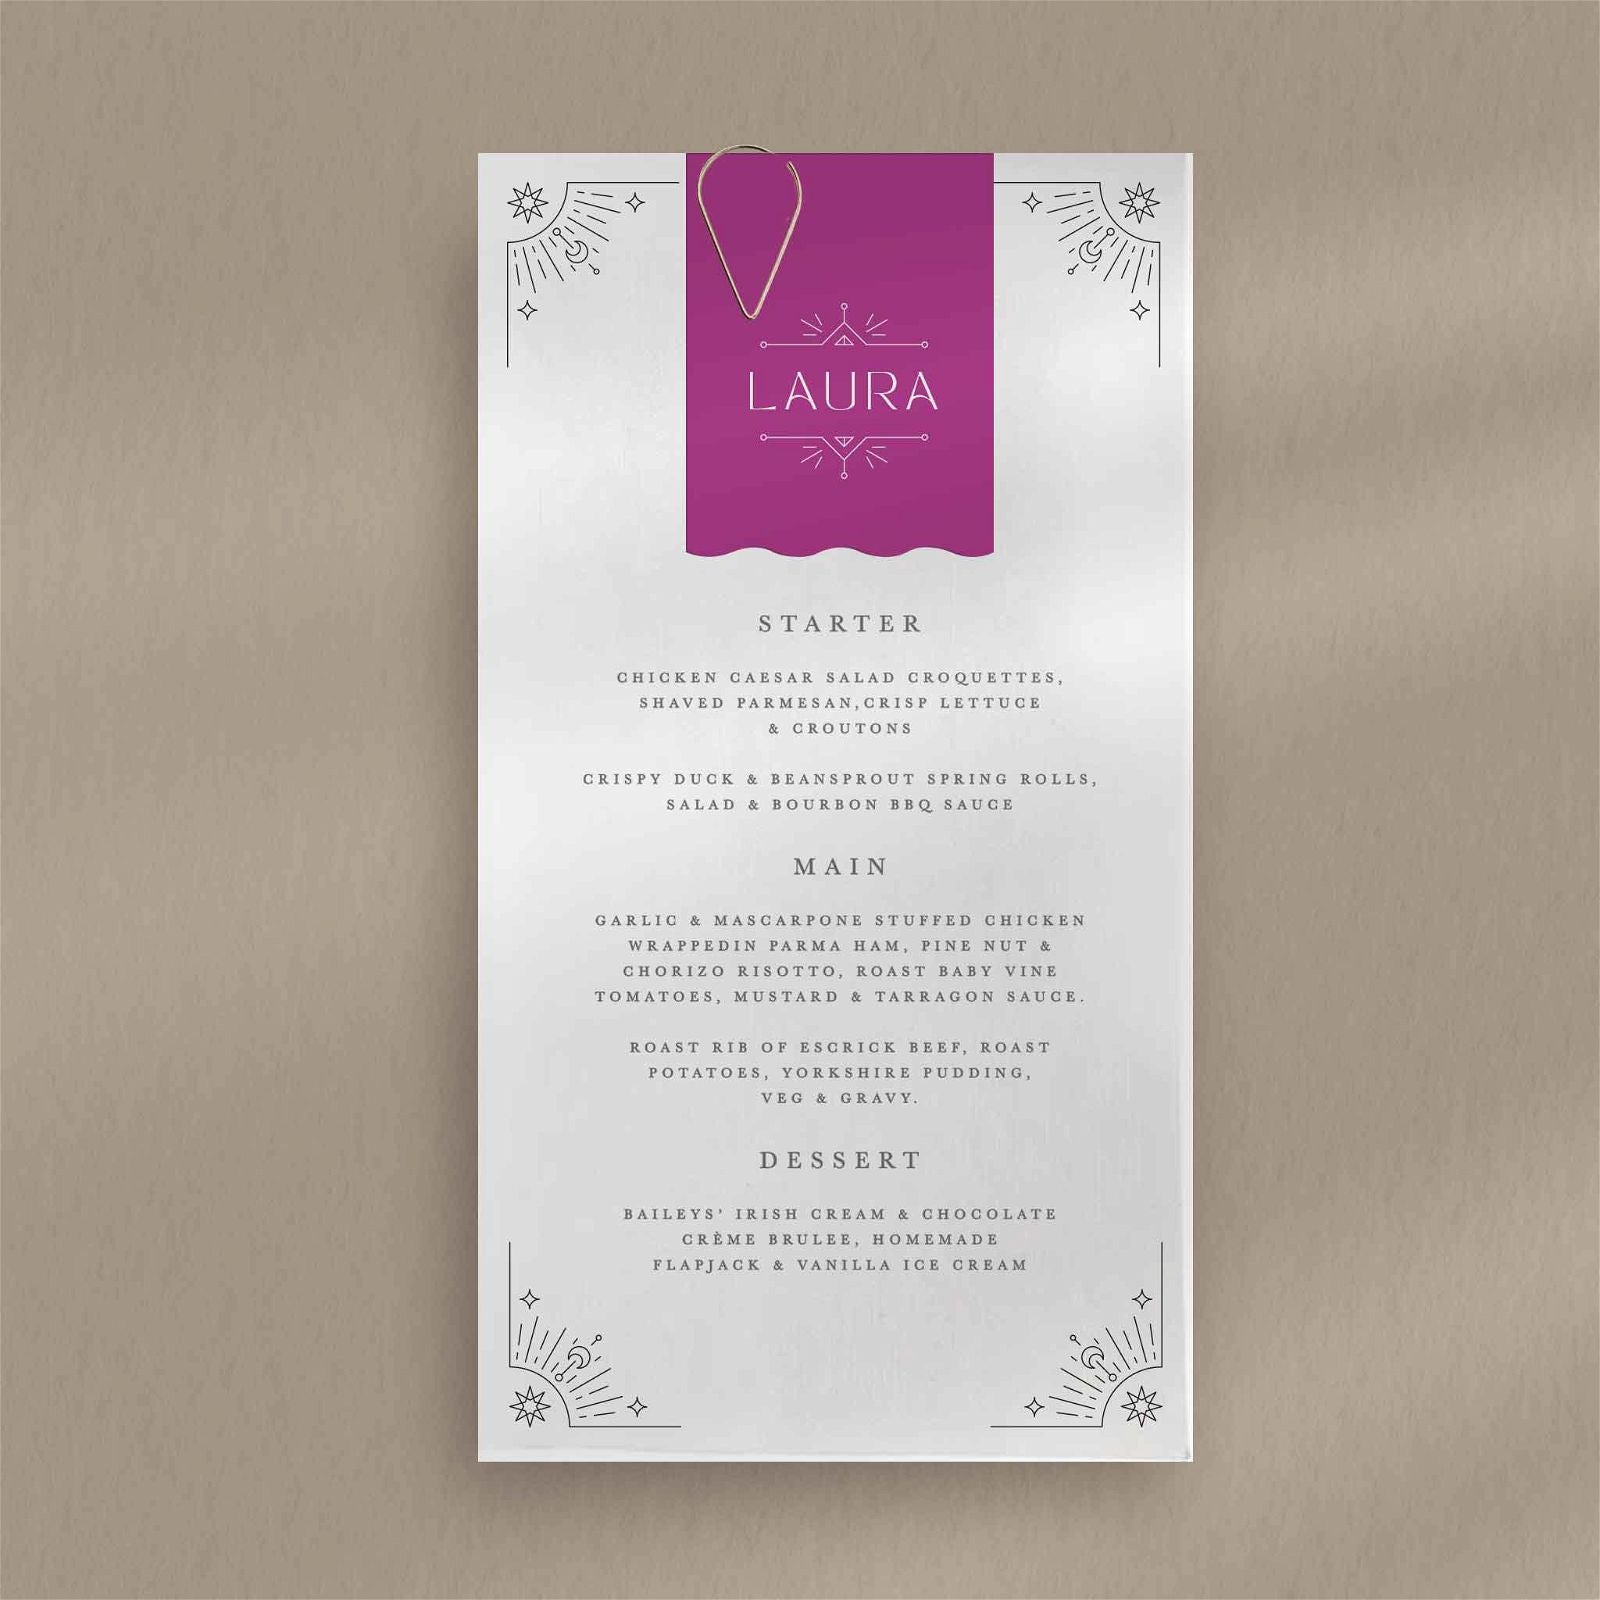 Laura Menu  Ivy and Gold Wedding Stationery   